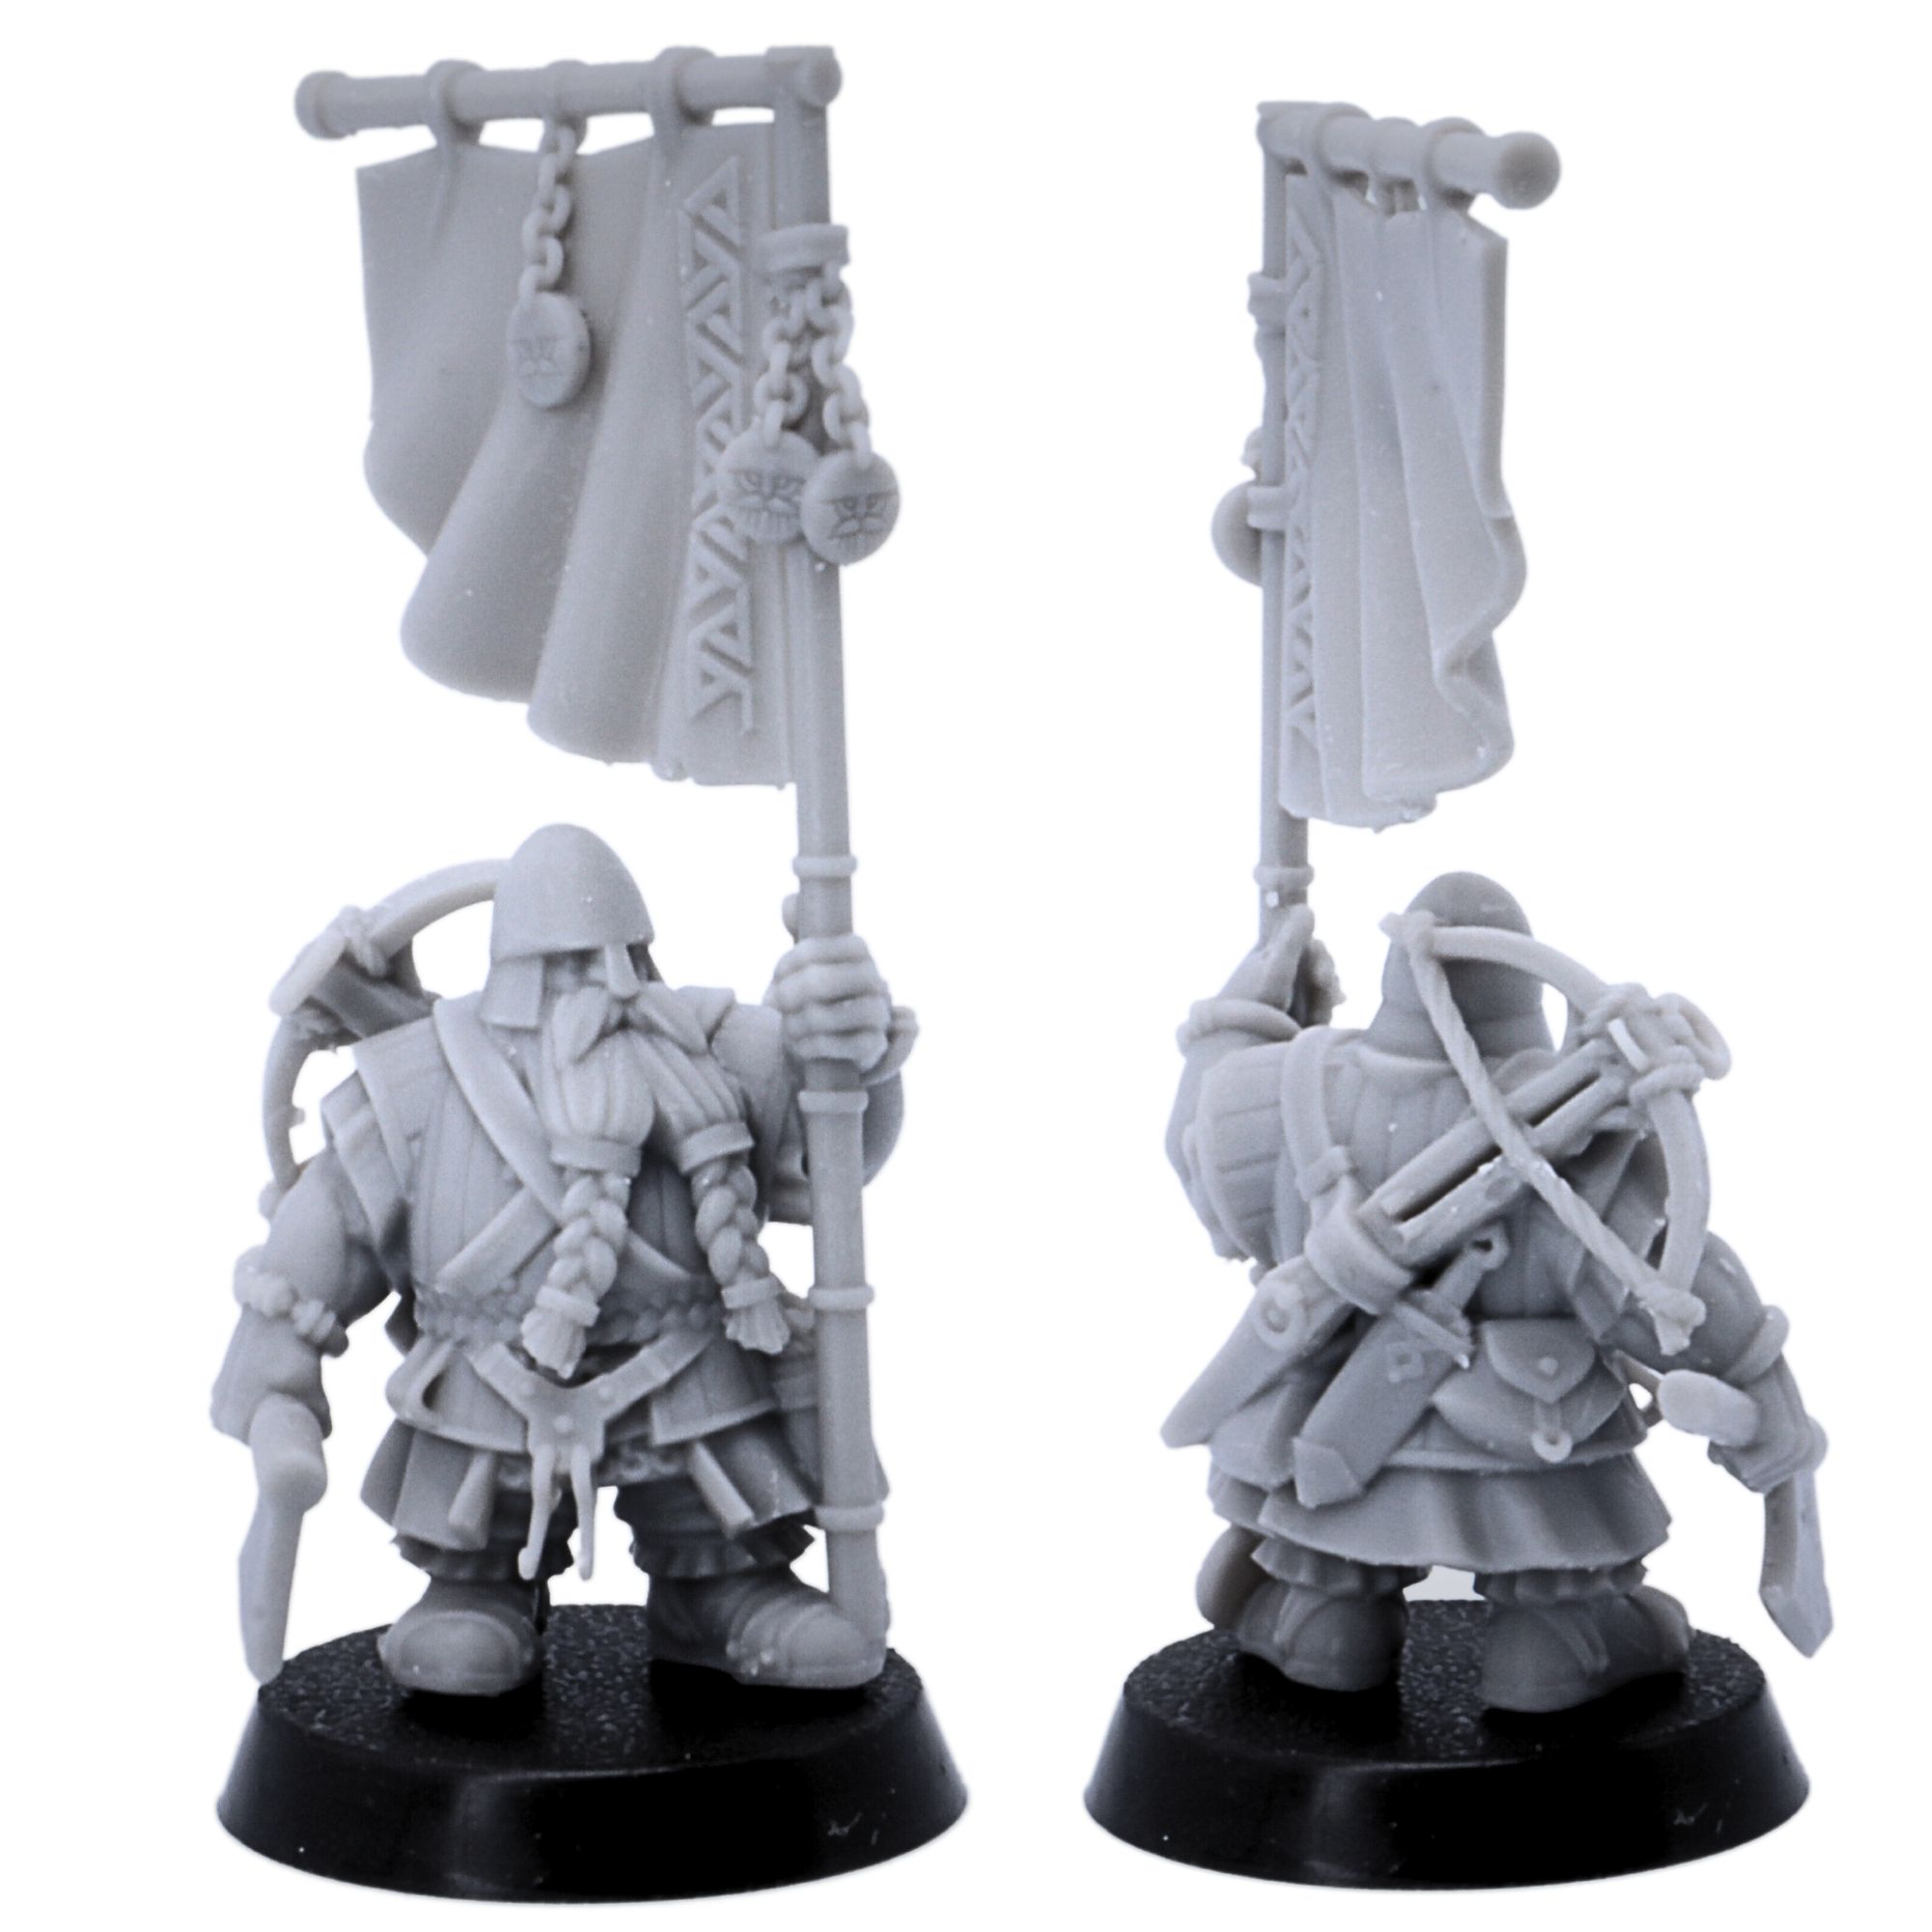 Dwarf Crossbowmen Miniature Models